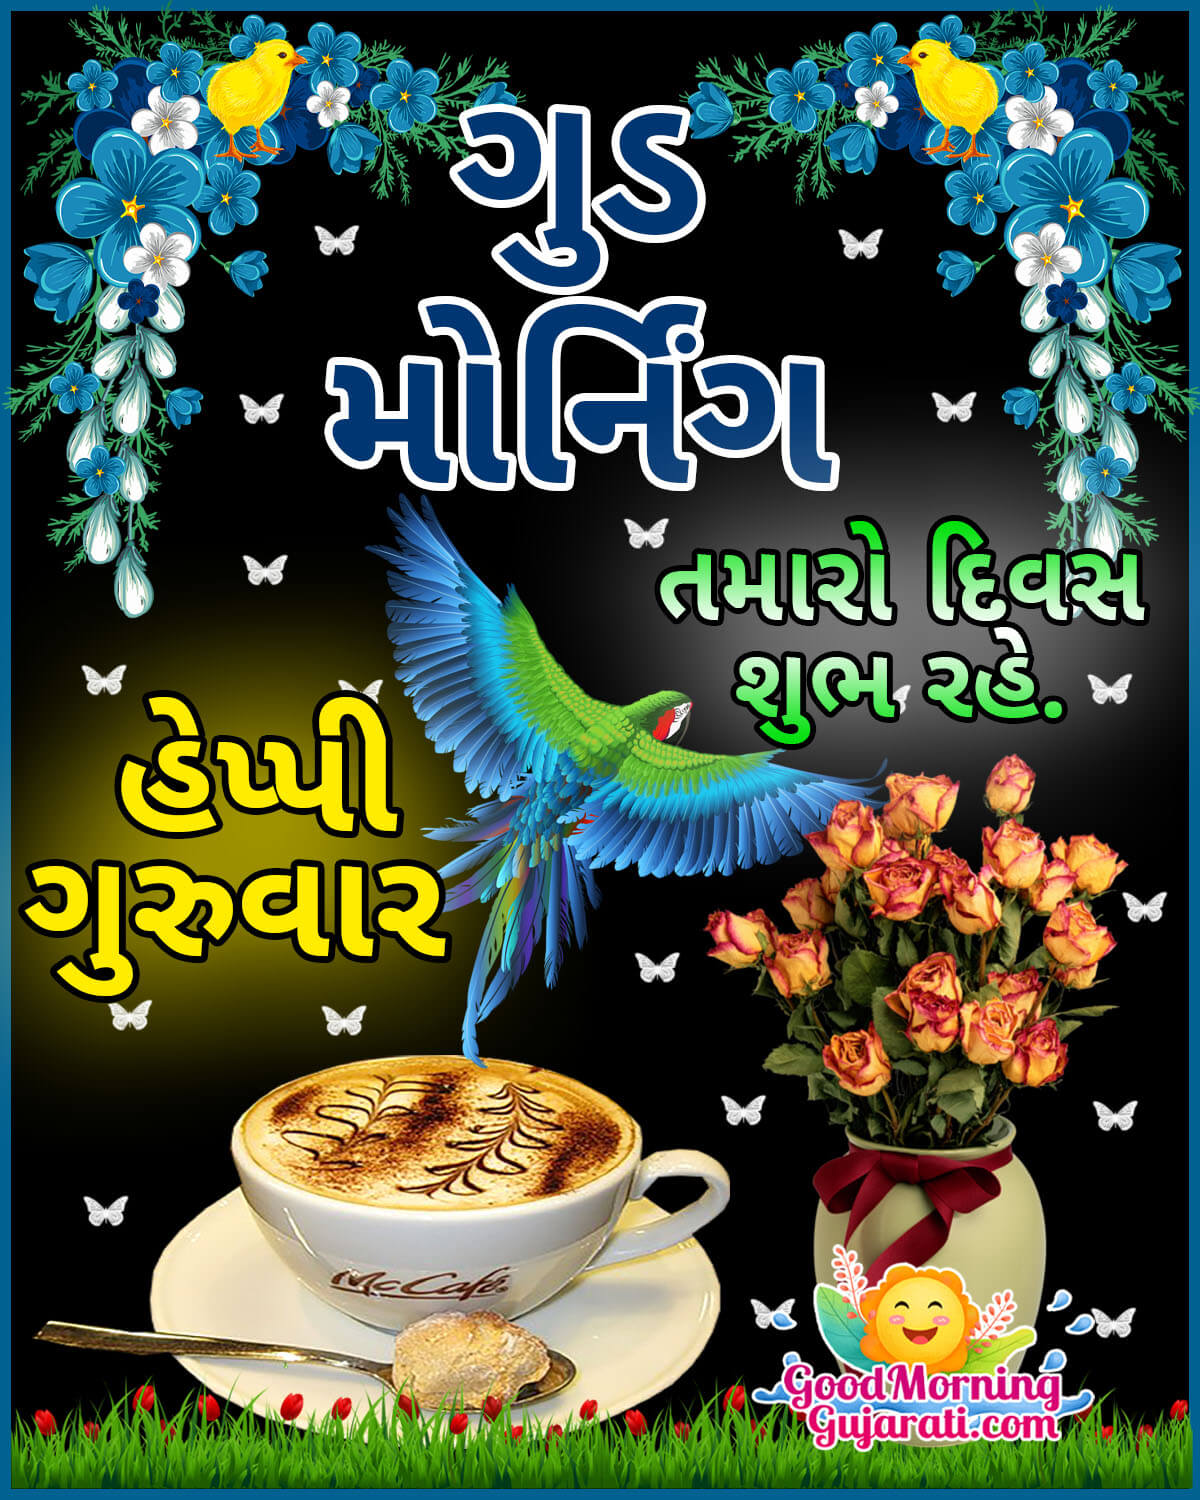 Good Morning Happy Thursday Images In Gujarati - Good Morning ...